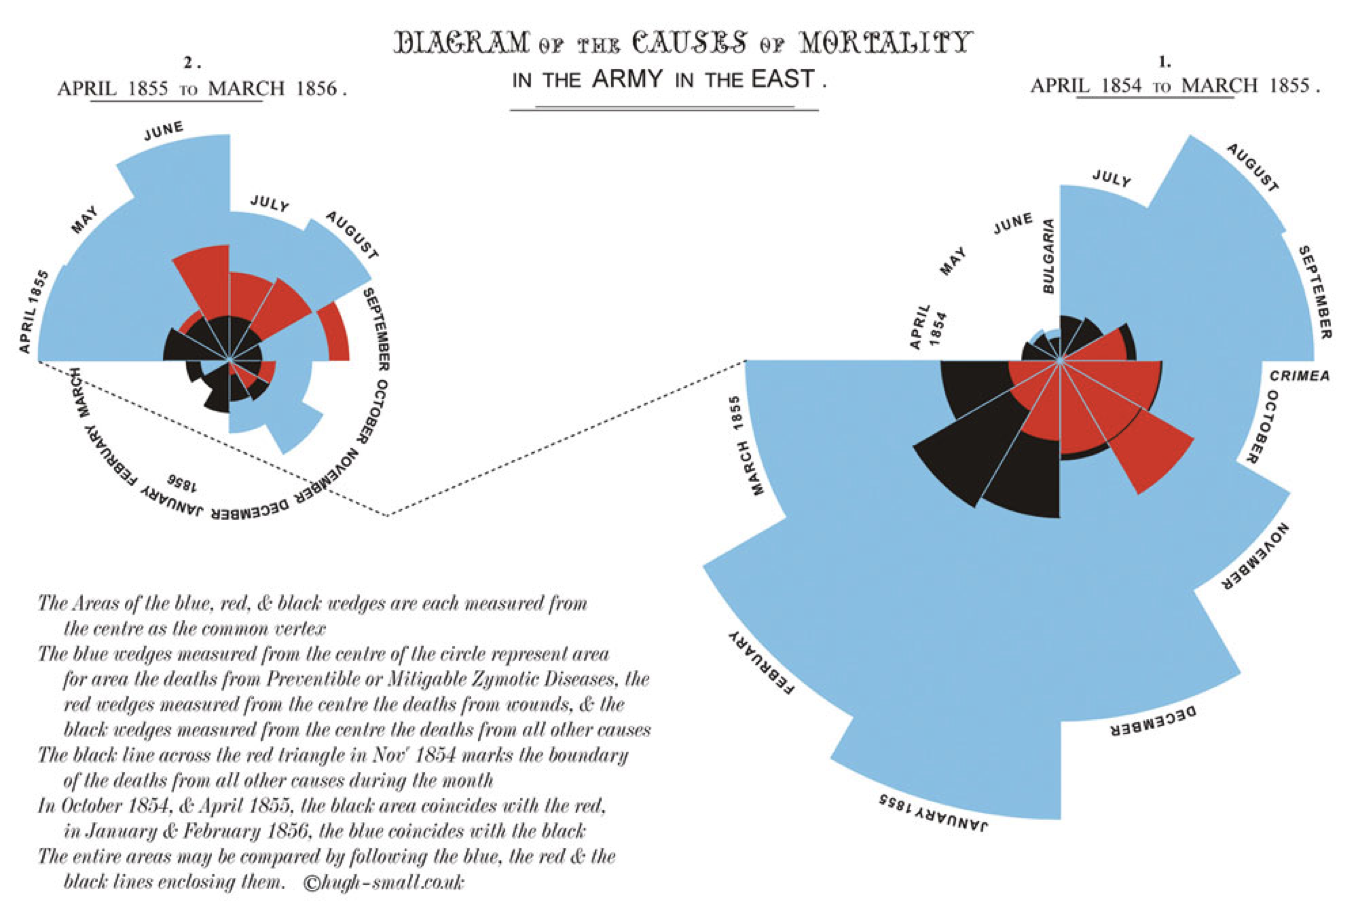 Classic epidemiology visualizations - Nightingale's Rose